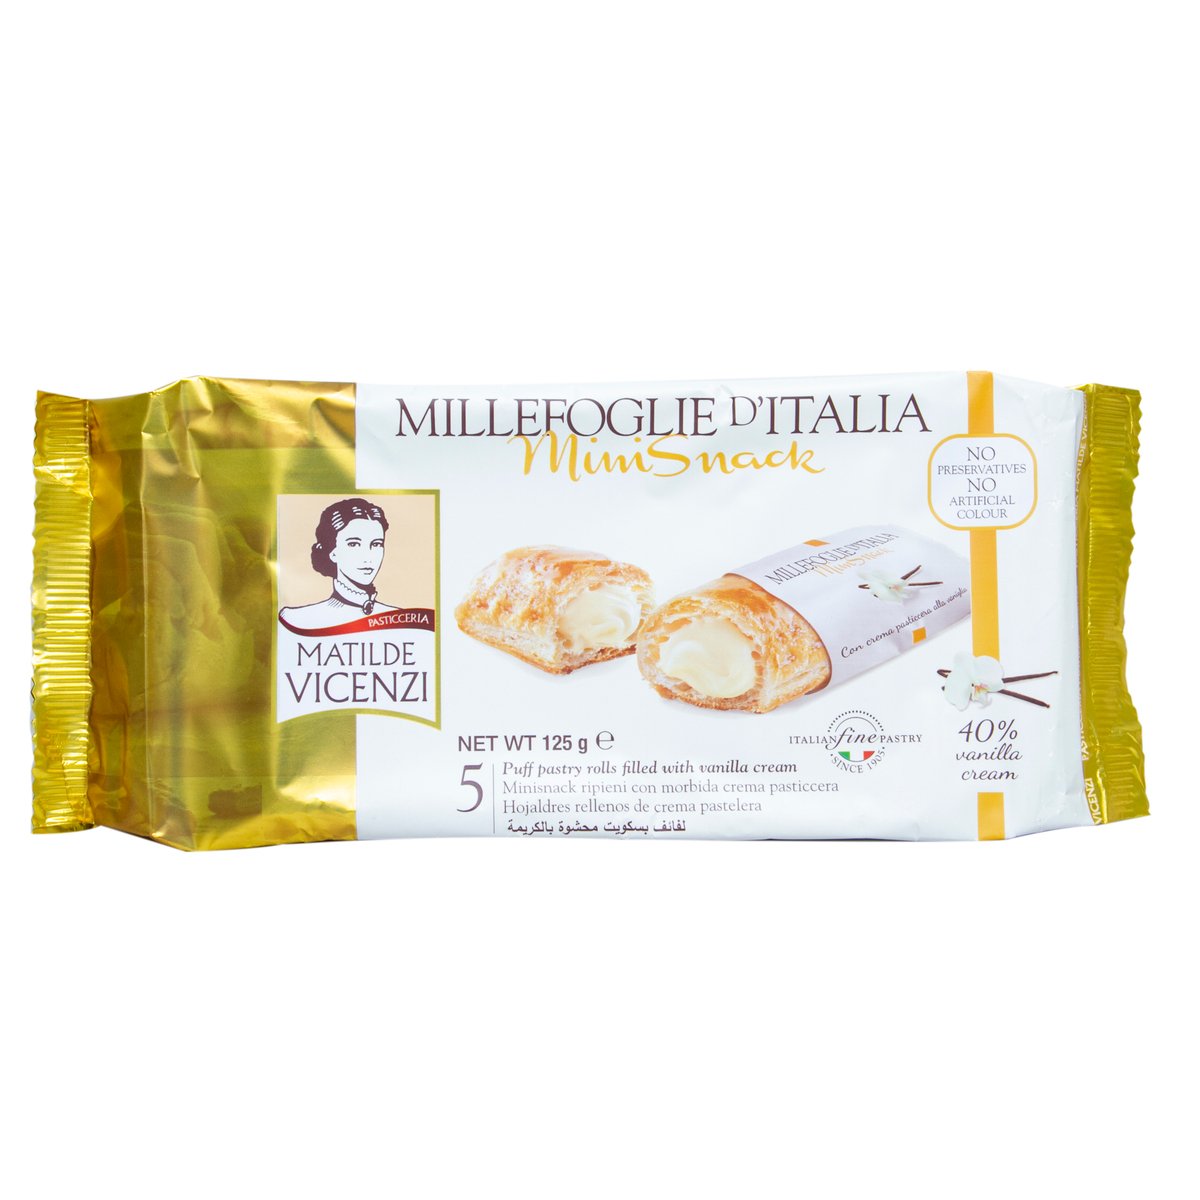 Matiled Vicenzi Millefoglie D'Italia Minis Puff Pastry With Vanilla Cream 125 g